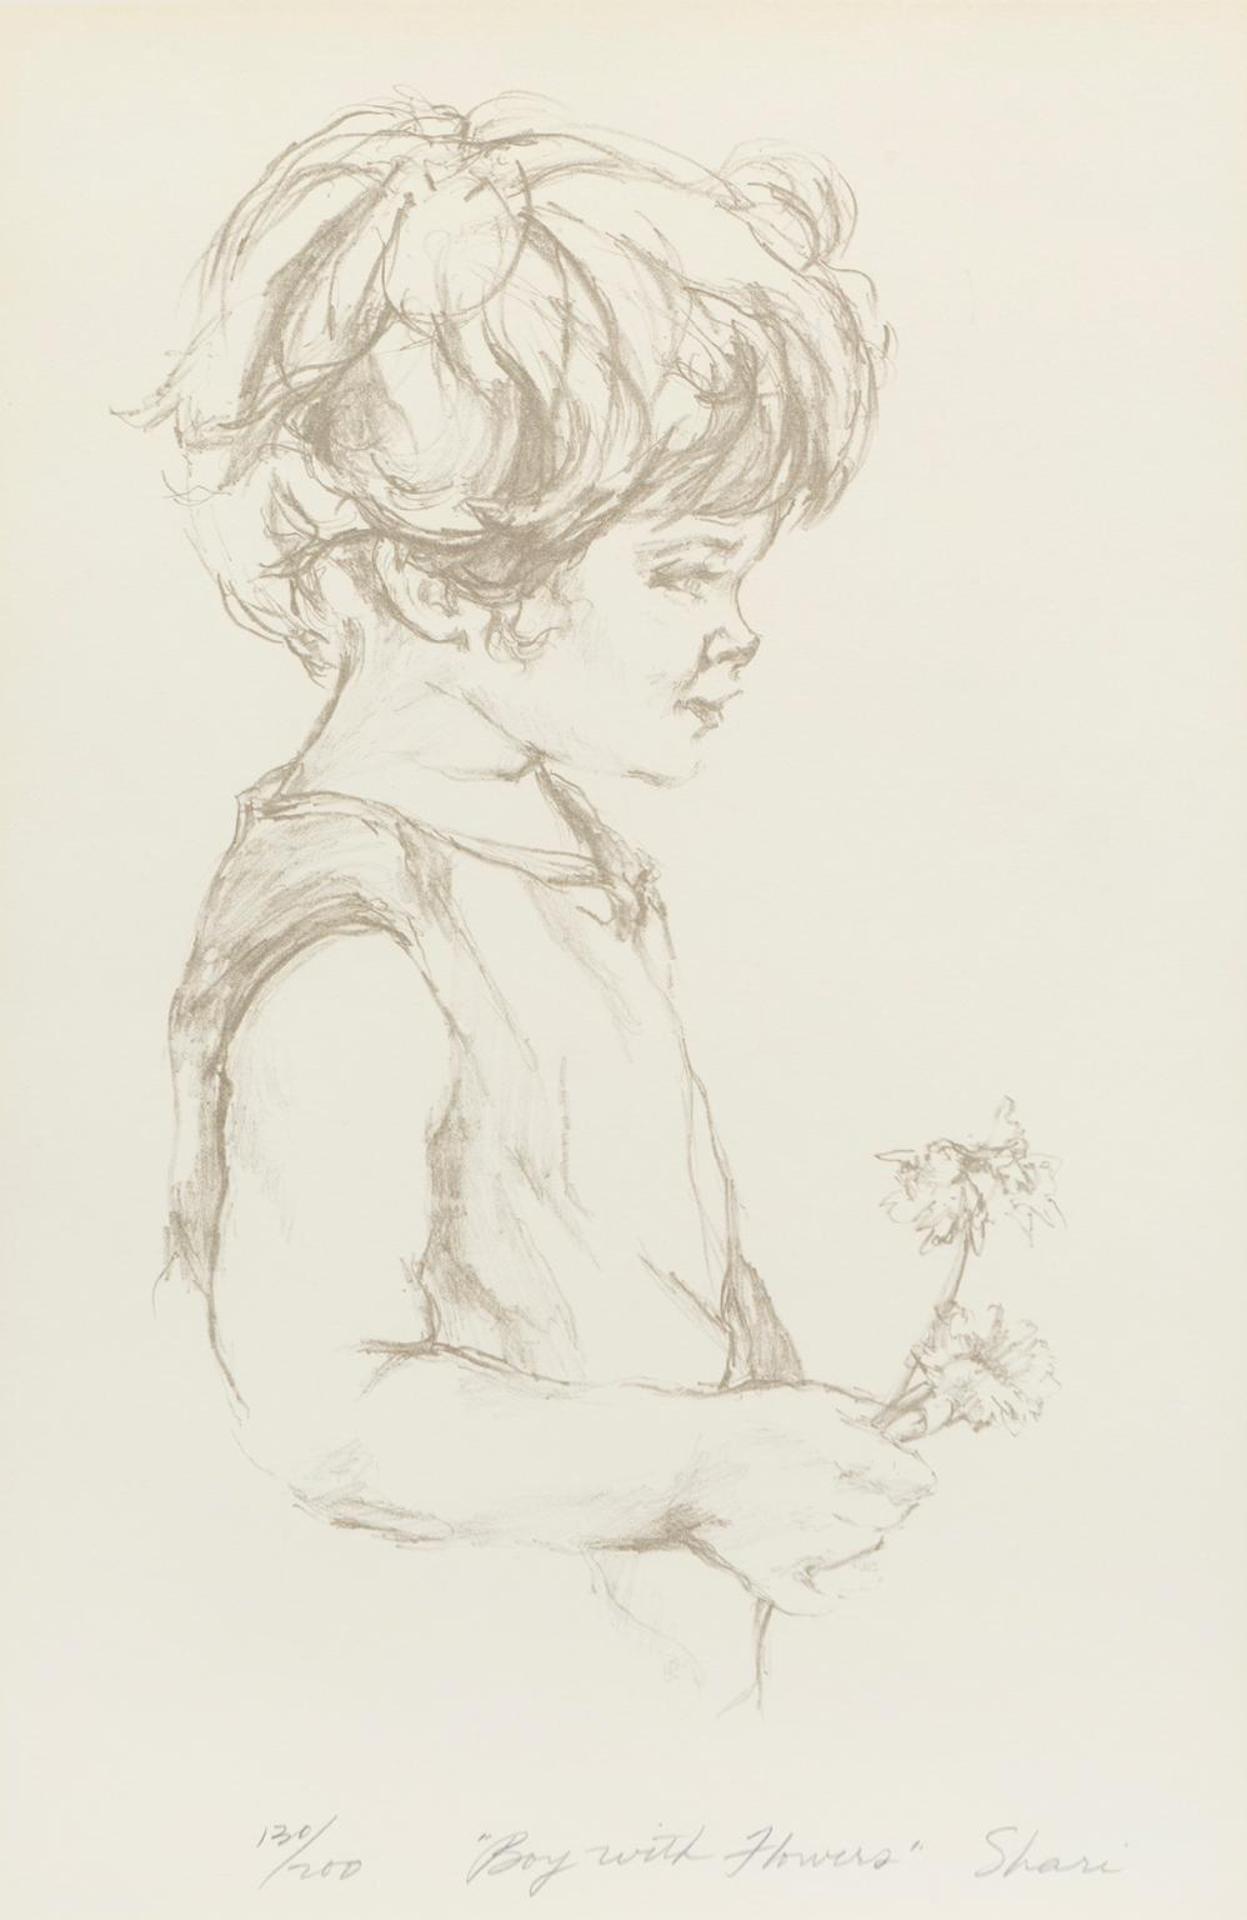 Shari - Boy with Flowers